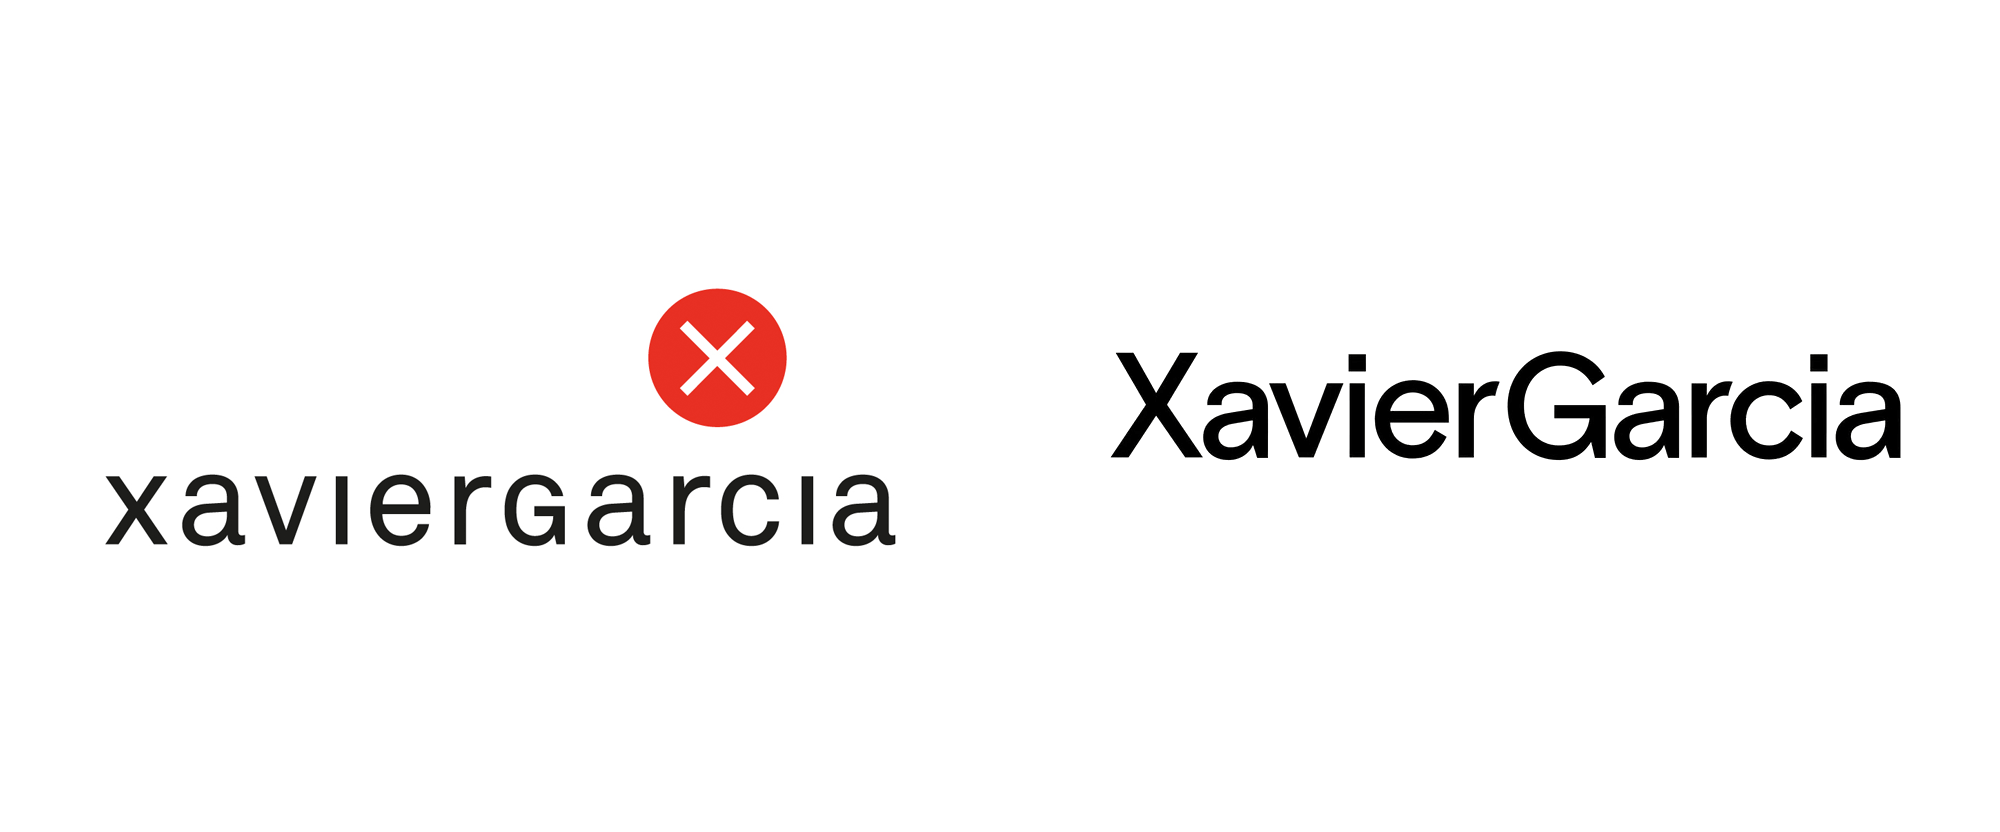 Garcia Logo - Brand New: New Logo and Identity for Xavier Garcia by Folch